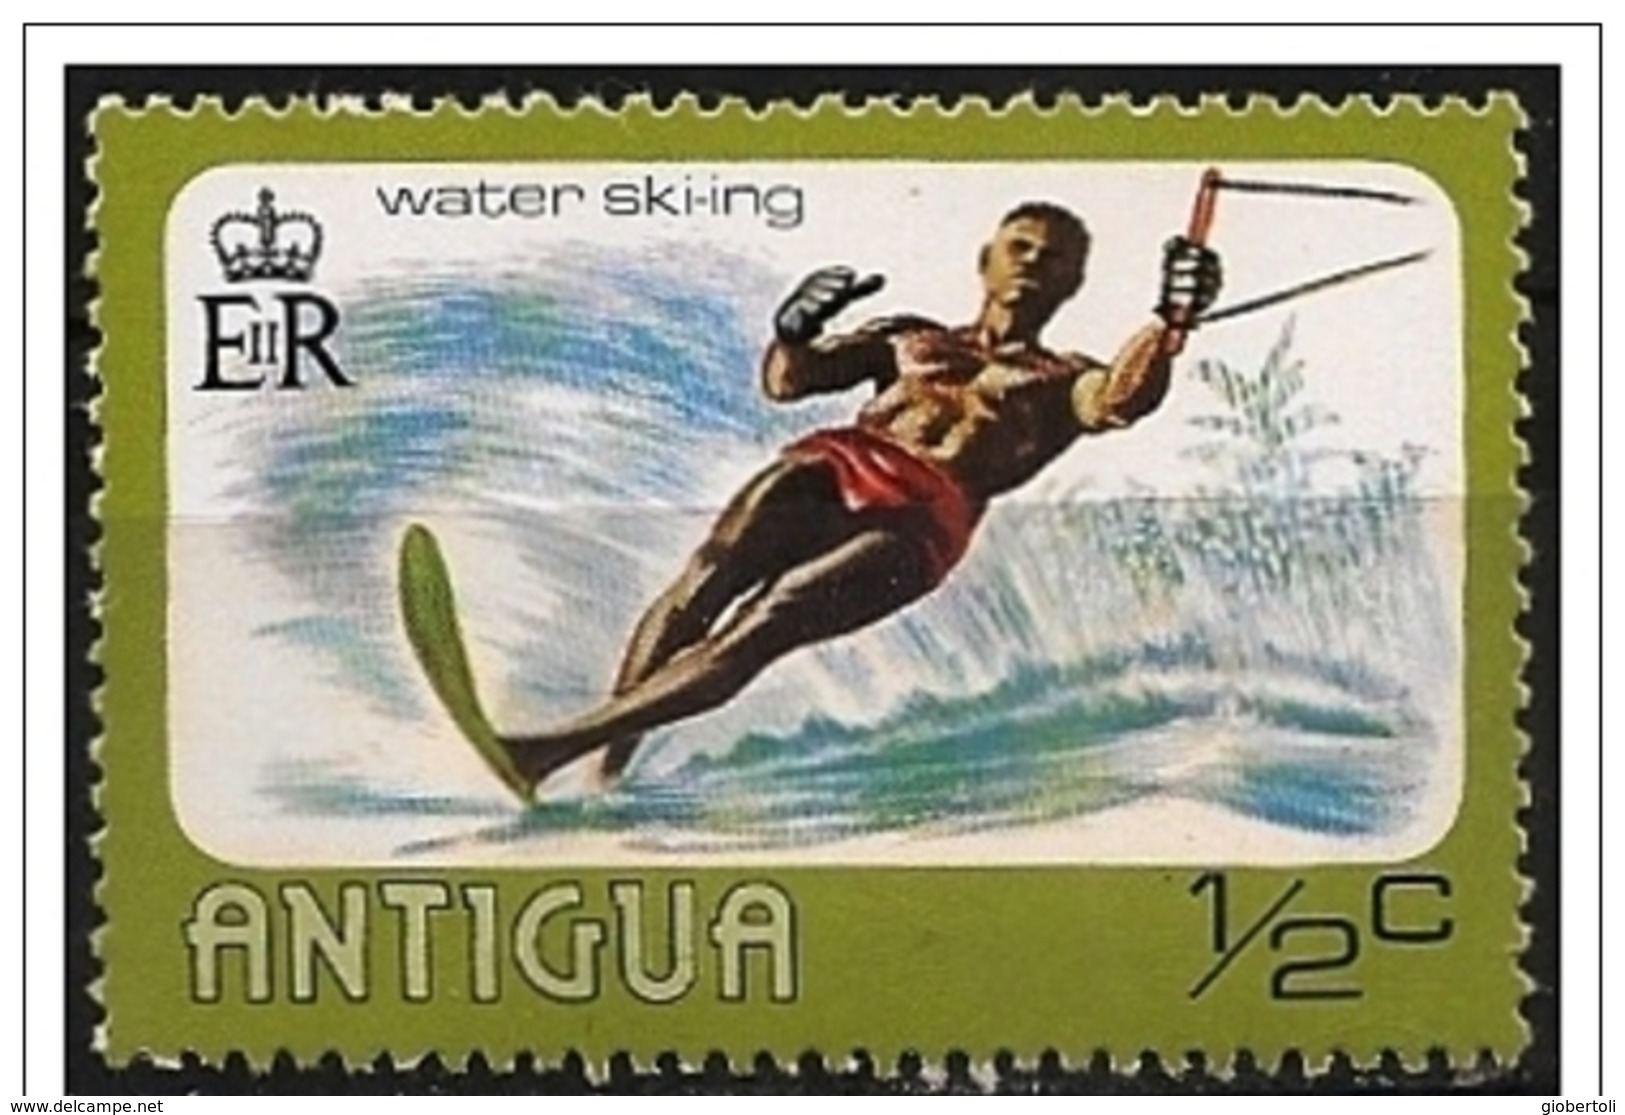 Antigua: Sci Nautico, Water Skiing, Ski Nautique - Water-skiing